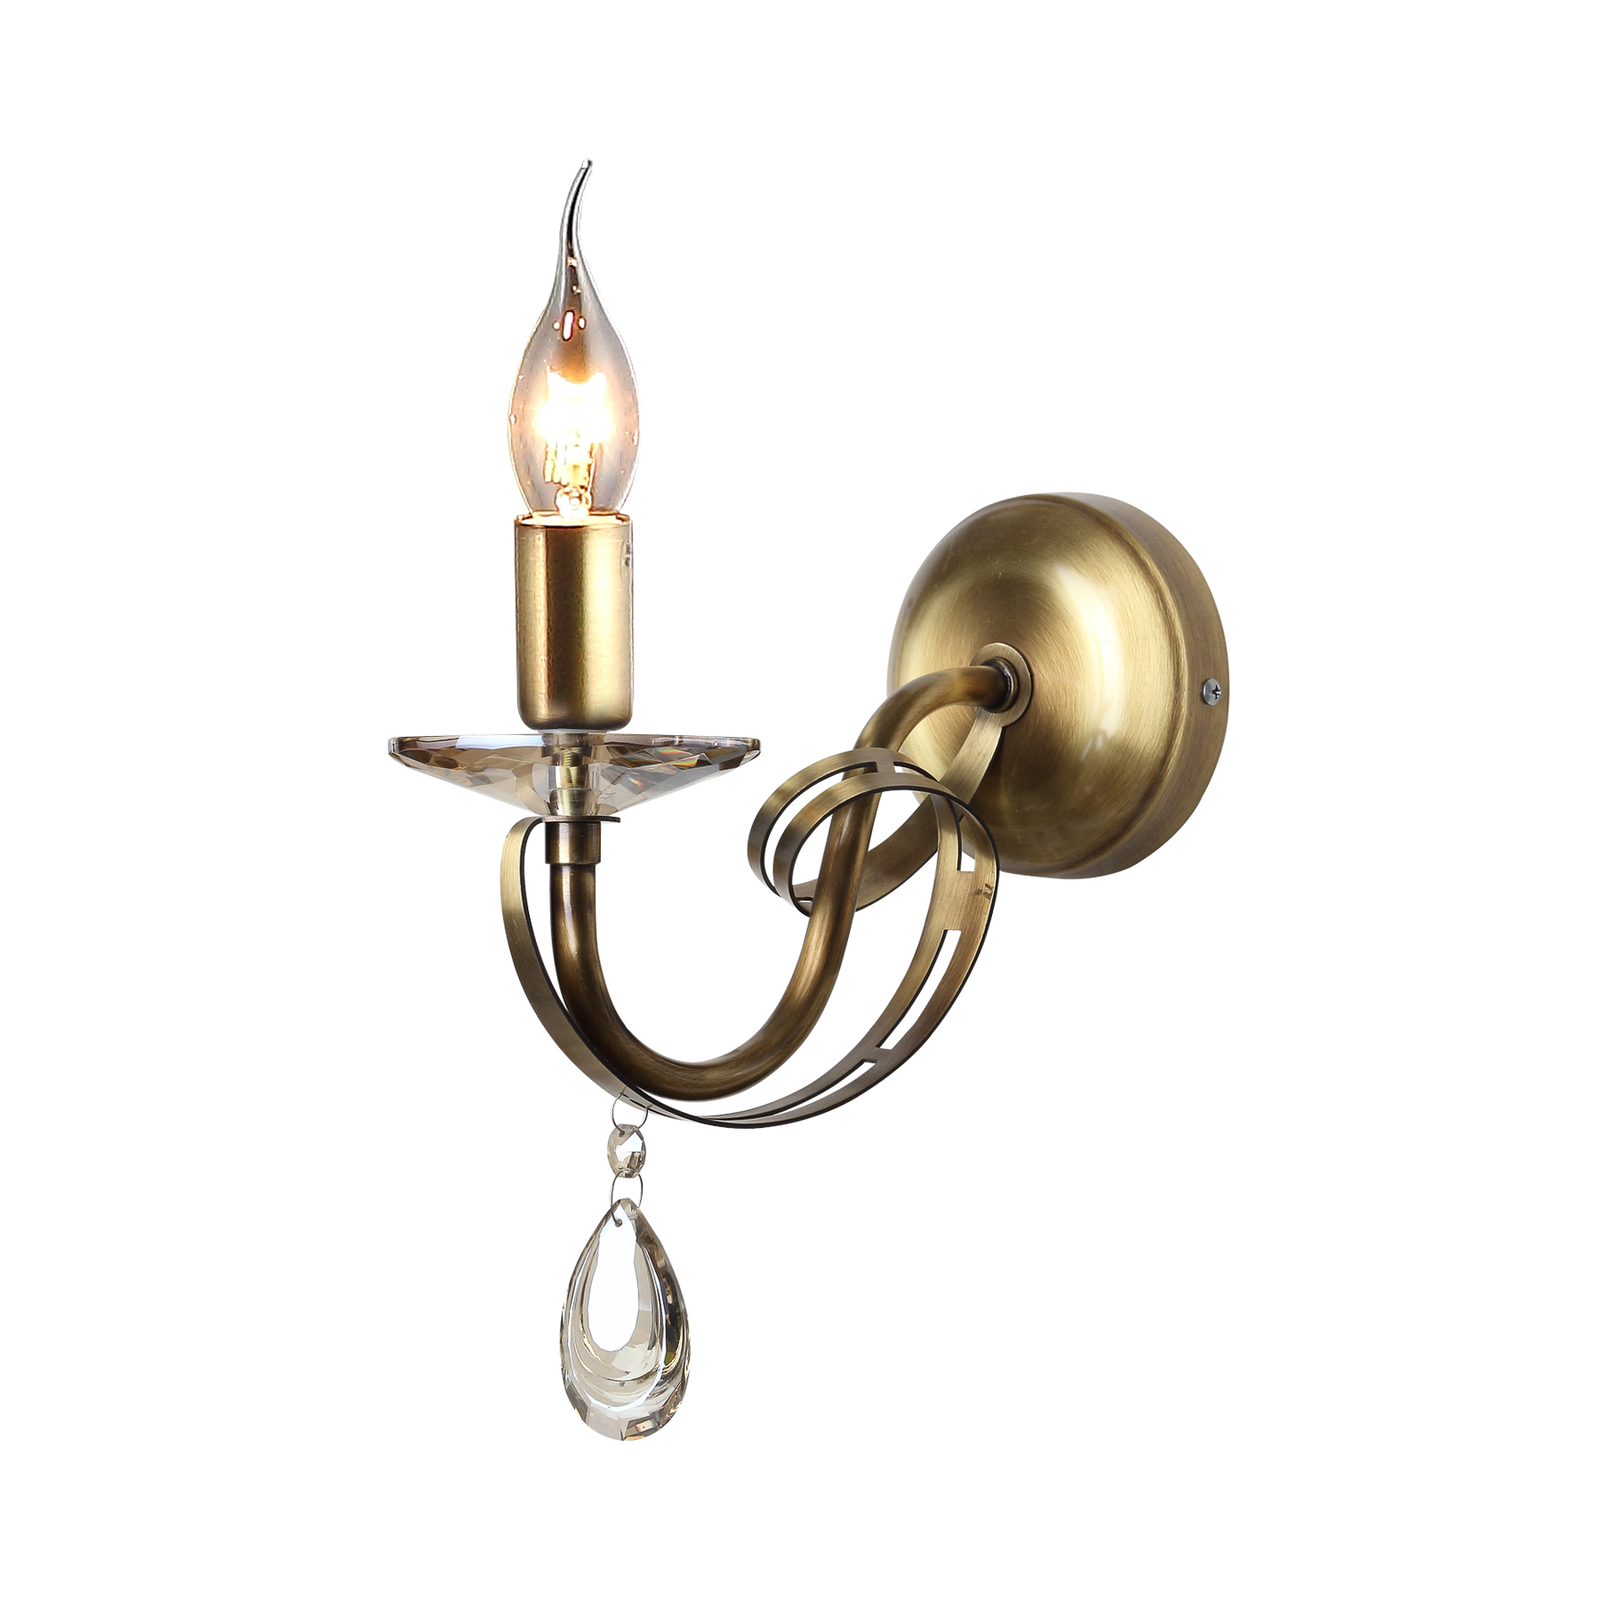 Castro wall light, antique brass, 1-bulb